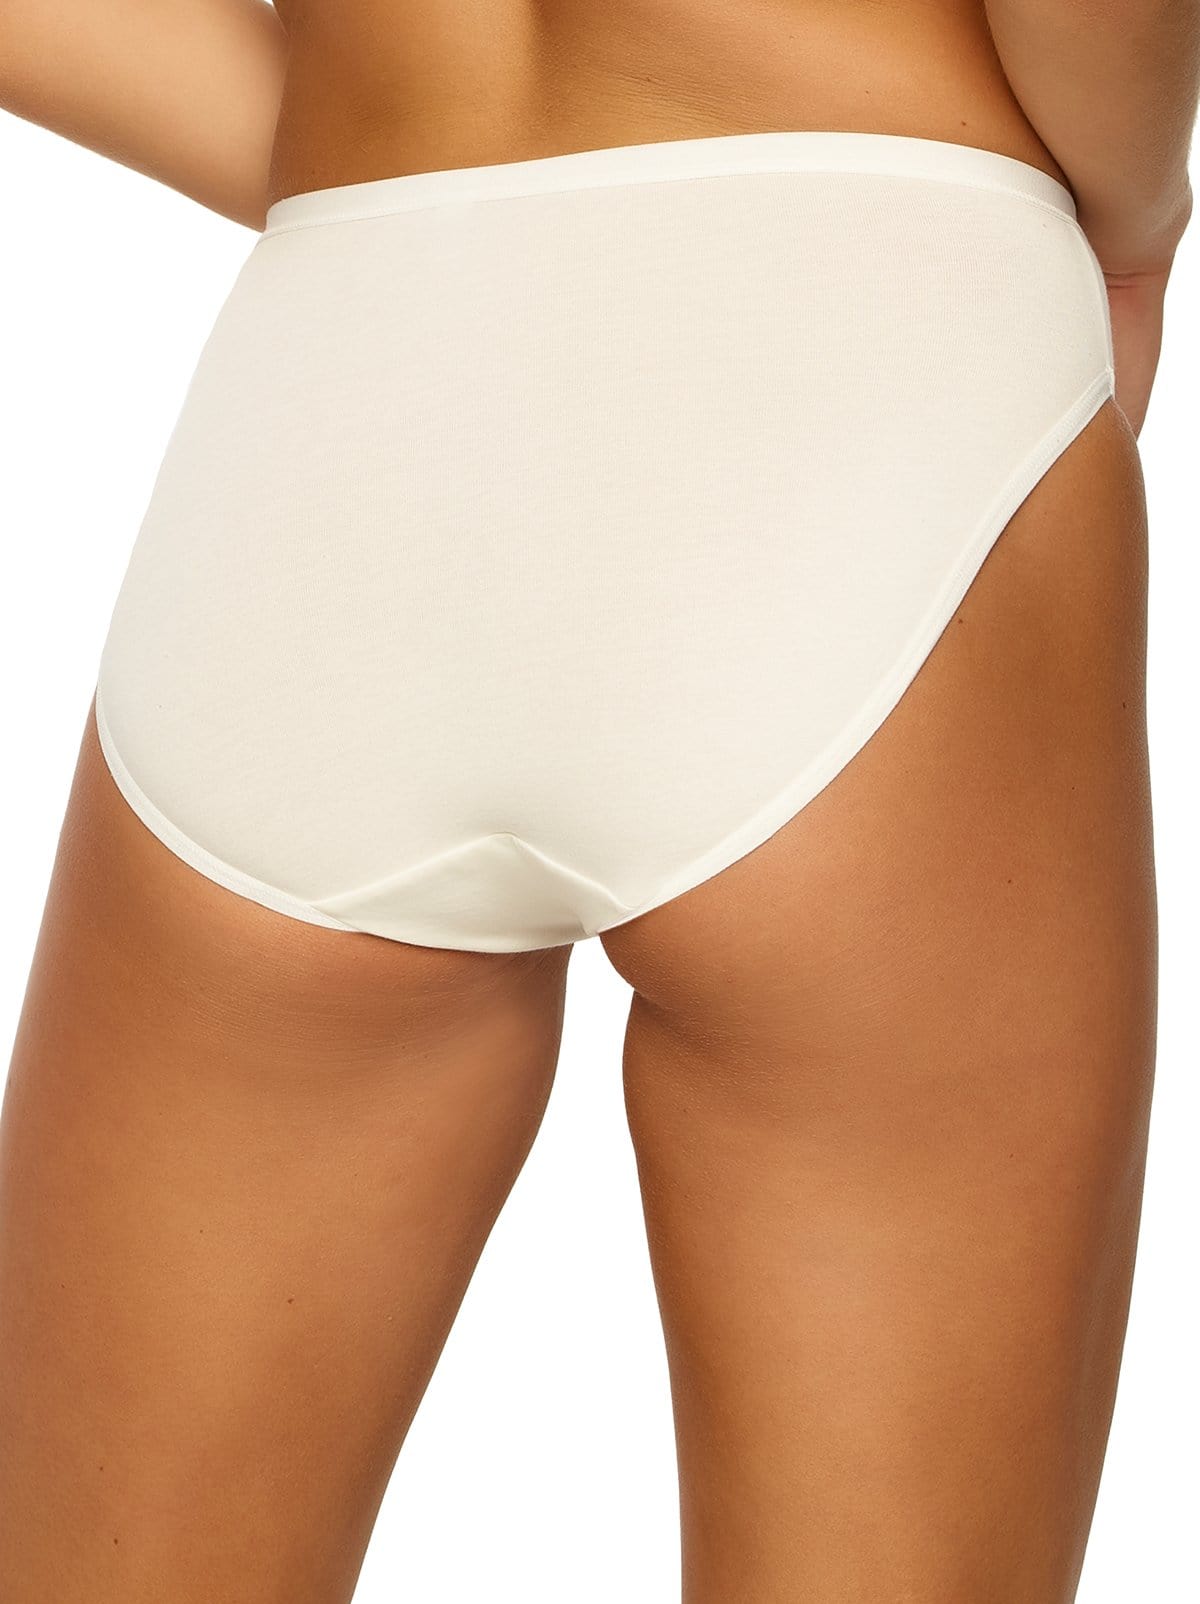 Felina Lingerie Full Coverage Hi-Cut Cotton Stretch Brief Modal 4 Pack  Panties S